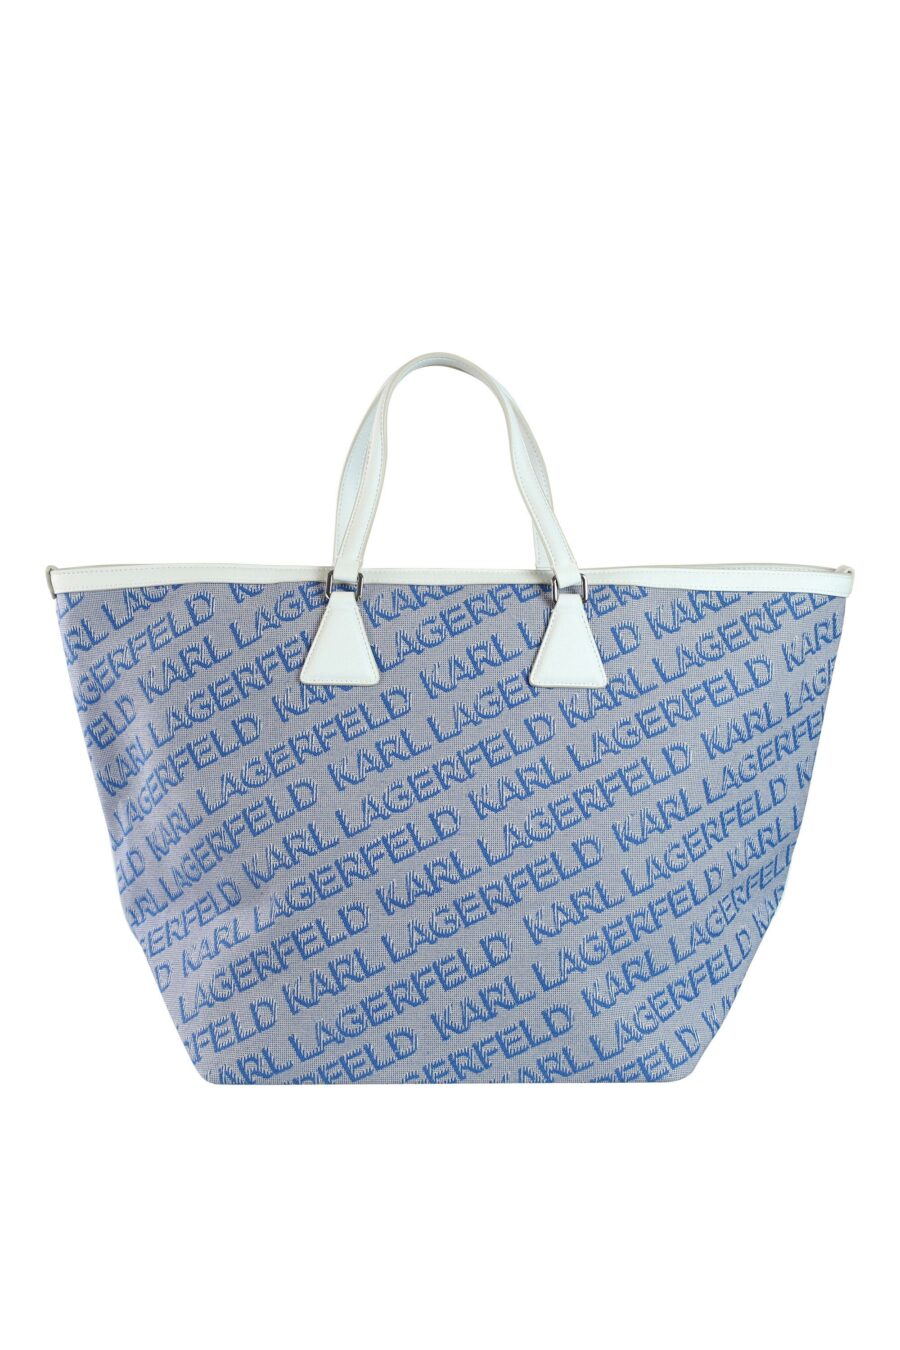 Tote bag blue "all over logo" - 8720744234203 3